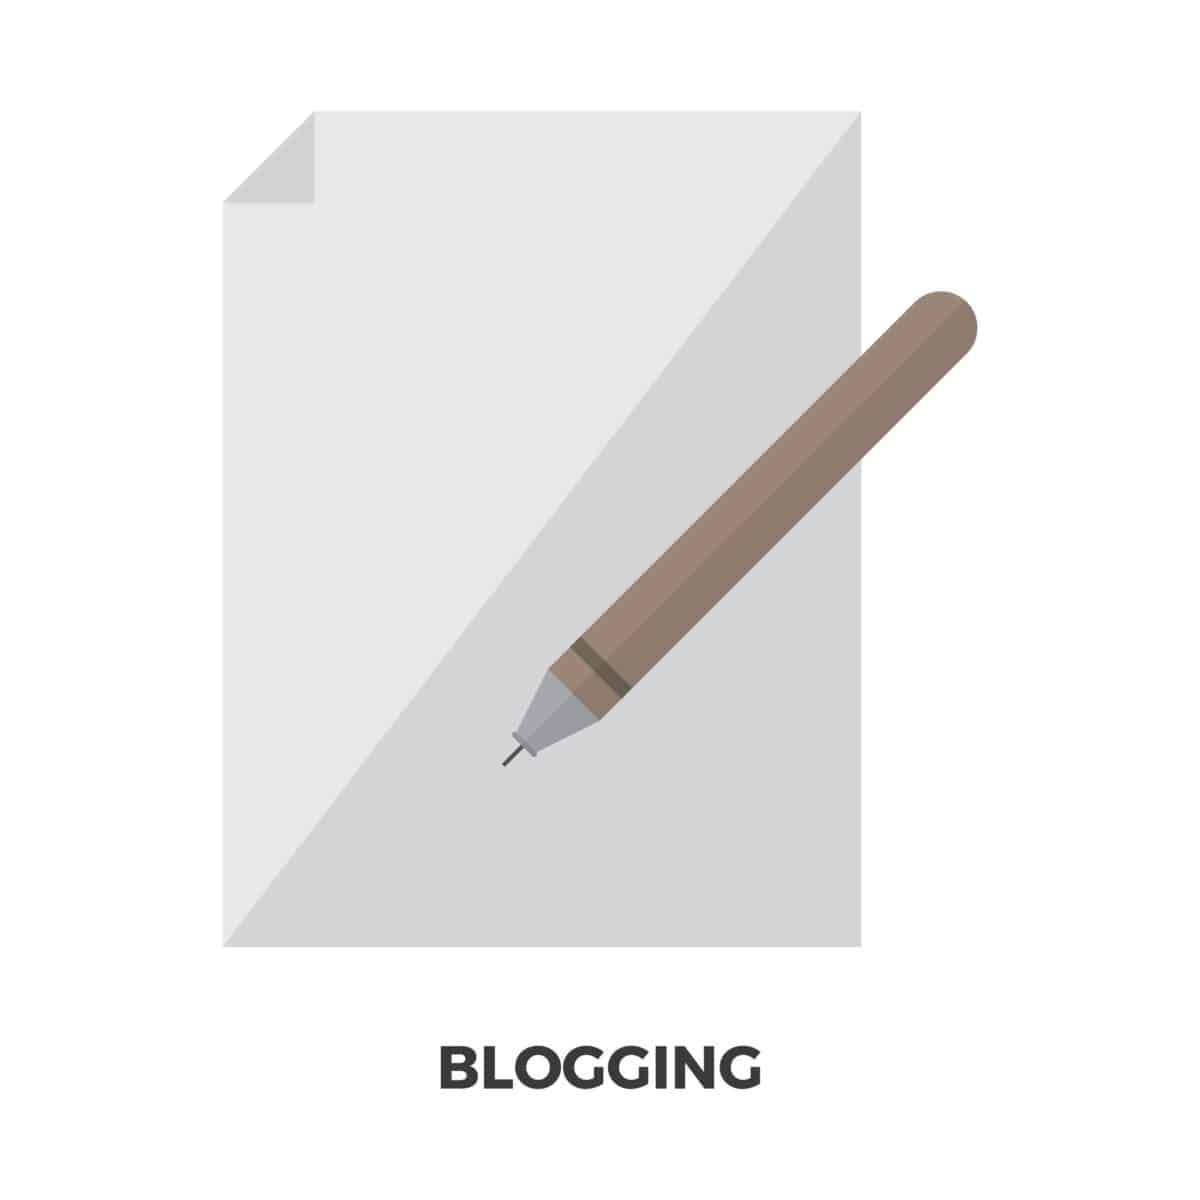 Do you offer a professional blog writing service?